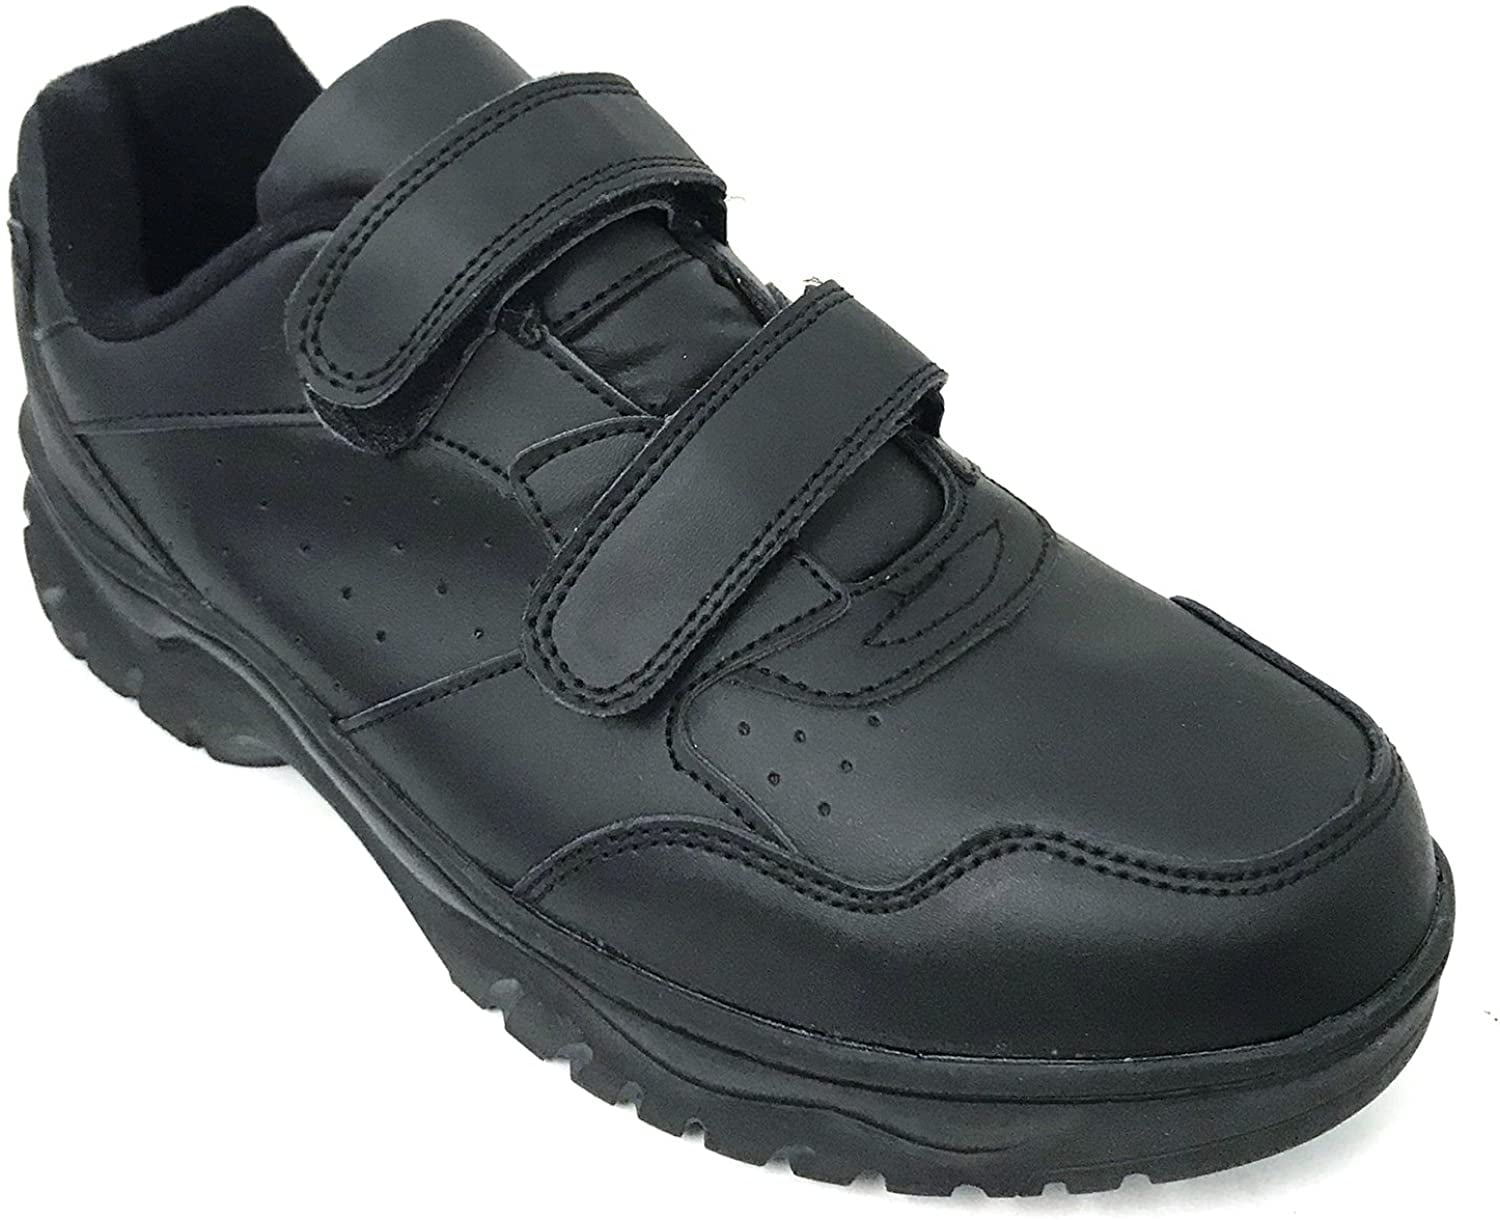 Men's Sneakers Comfort Walking Hook and Loop Work Shoes - Walmart.com